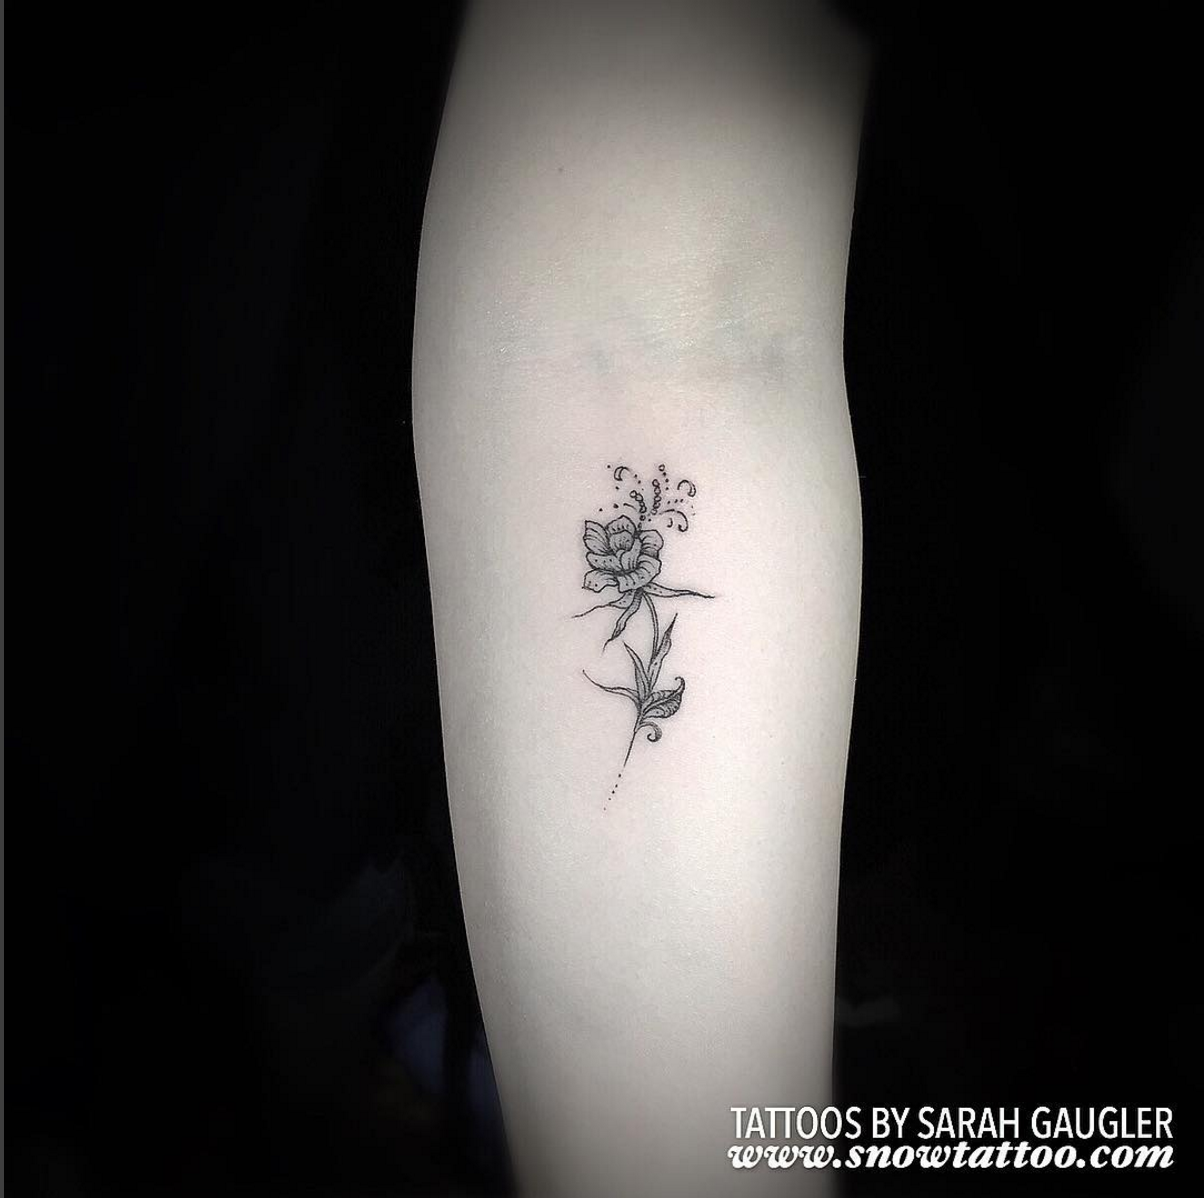 Sarah Gaugler Snow Tattoo Custom Floral Original Design Fine Line Detailed Intricate DetailedTattoo IntricateTattoo Finelinetattoo New York Best Tattoos Best Tattoo Artist NYC.png